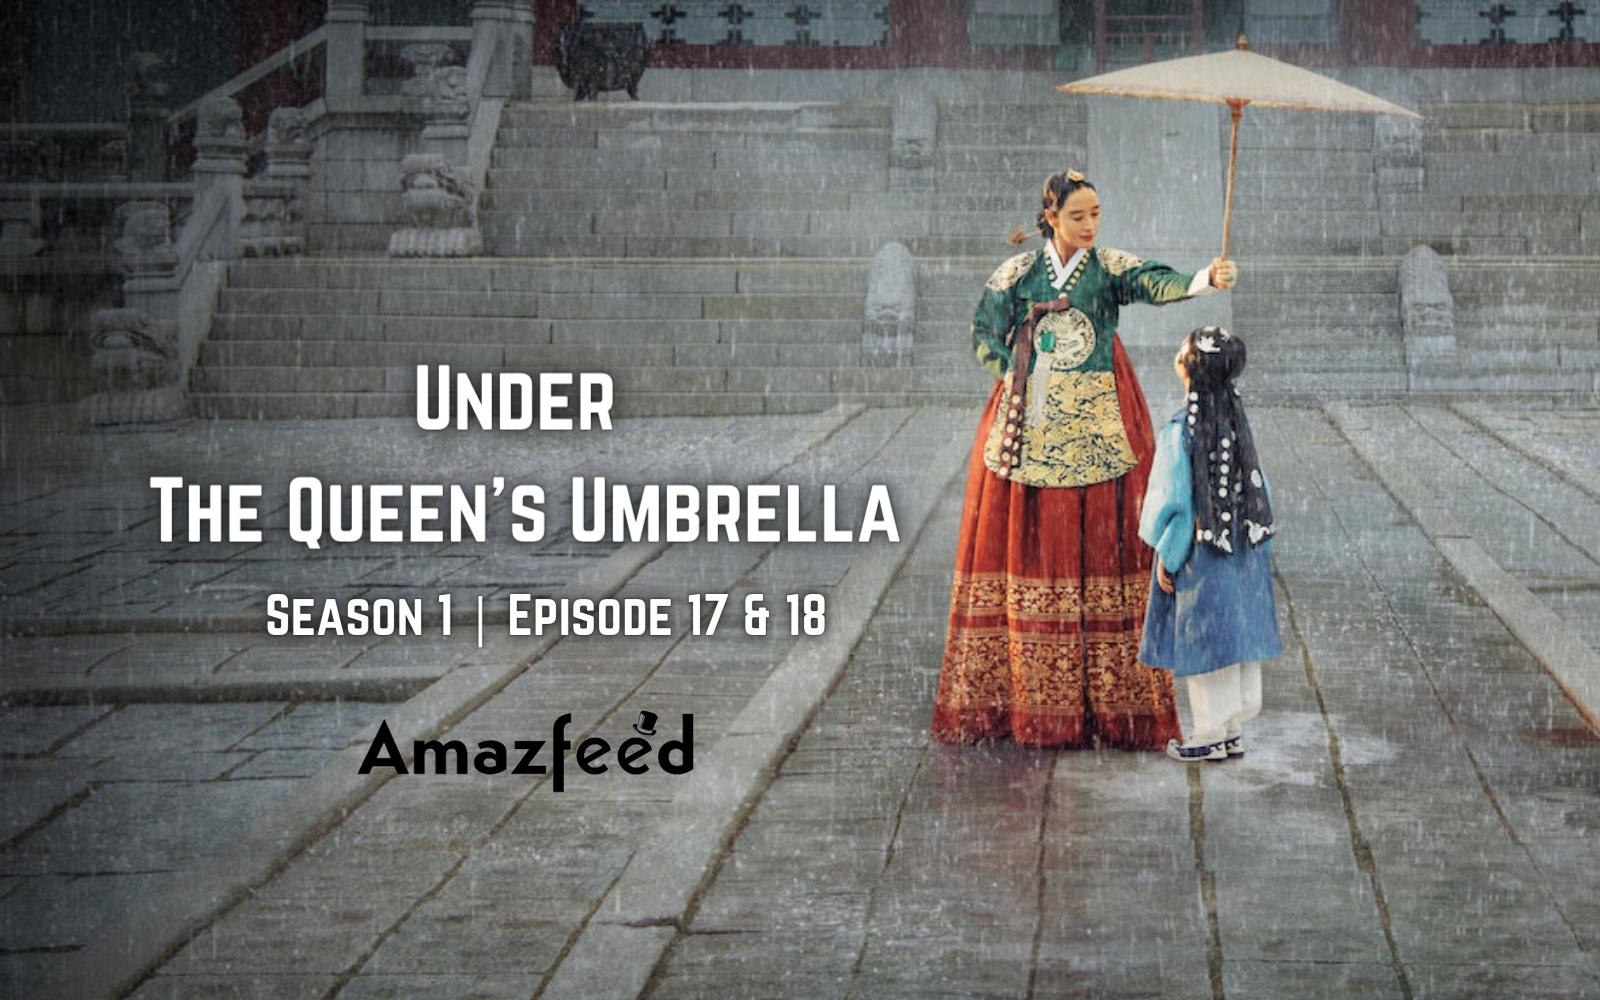 Under The Queen’s Umbrella Episodes 17 & 18